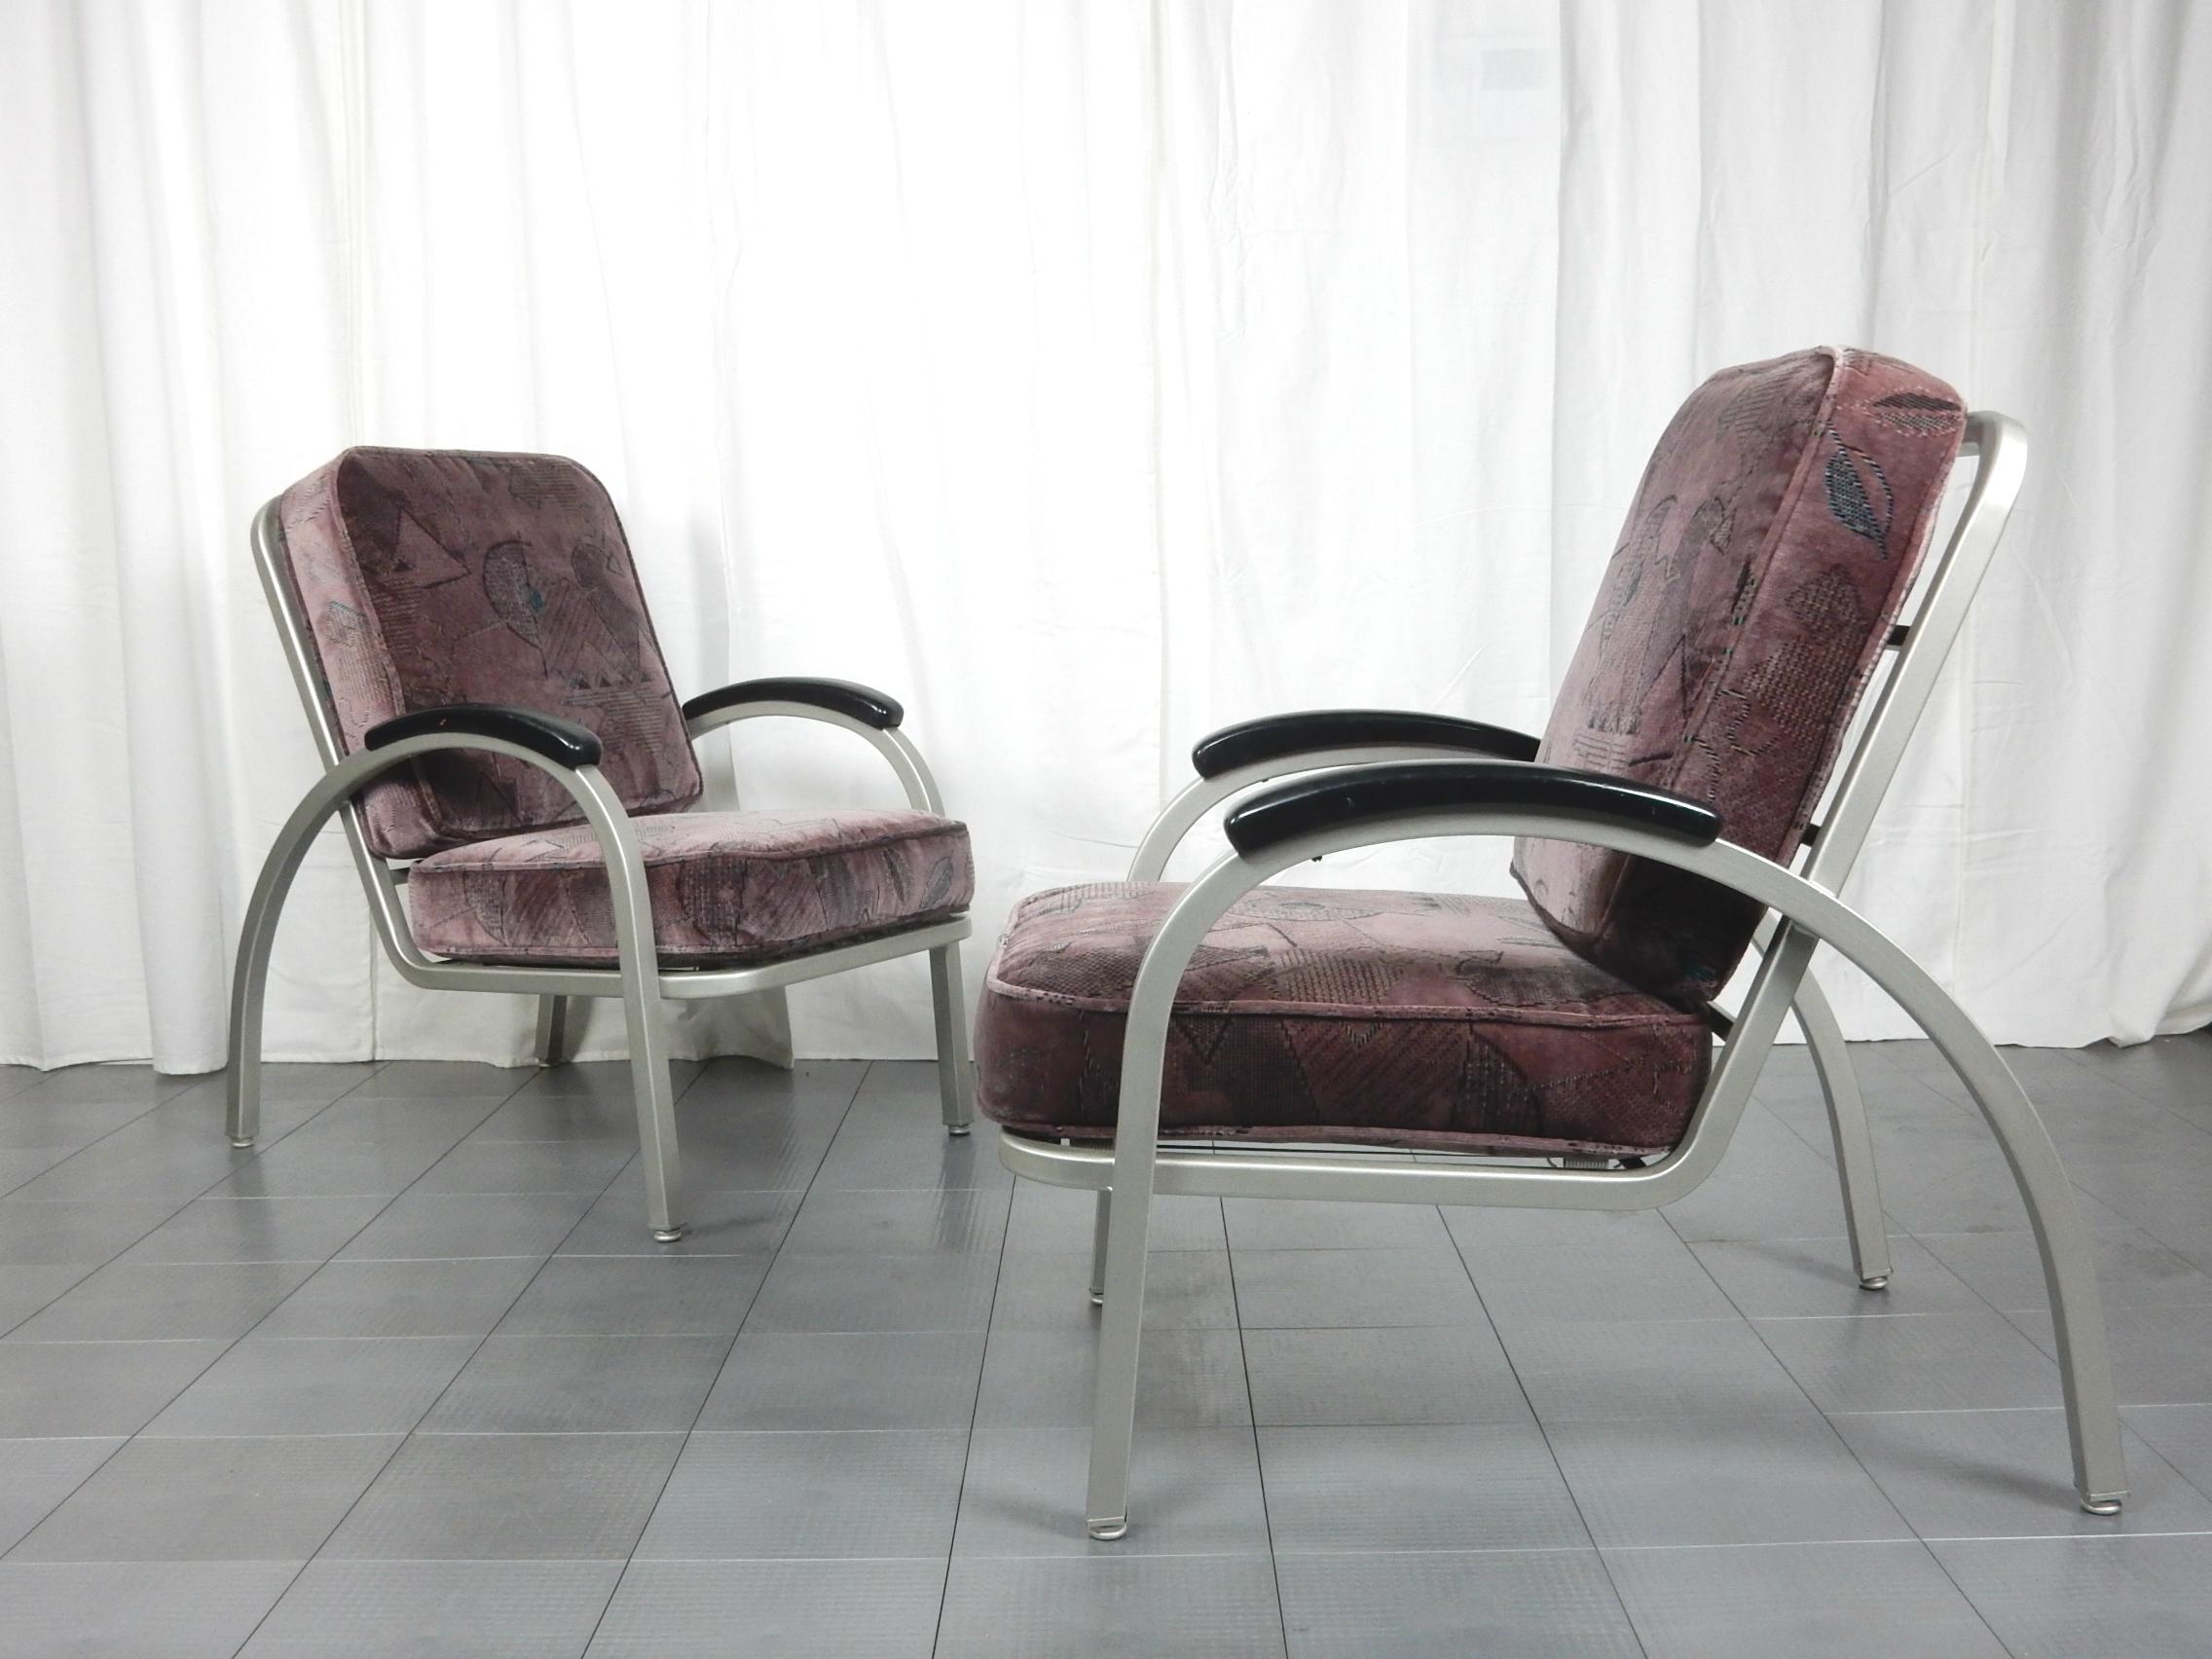 Art Deco Bauhaus Lounge Chairs Designed by Norman Bel Geddes 1